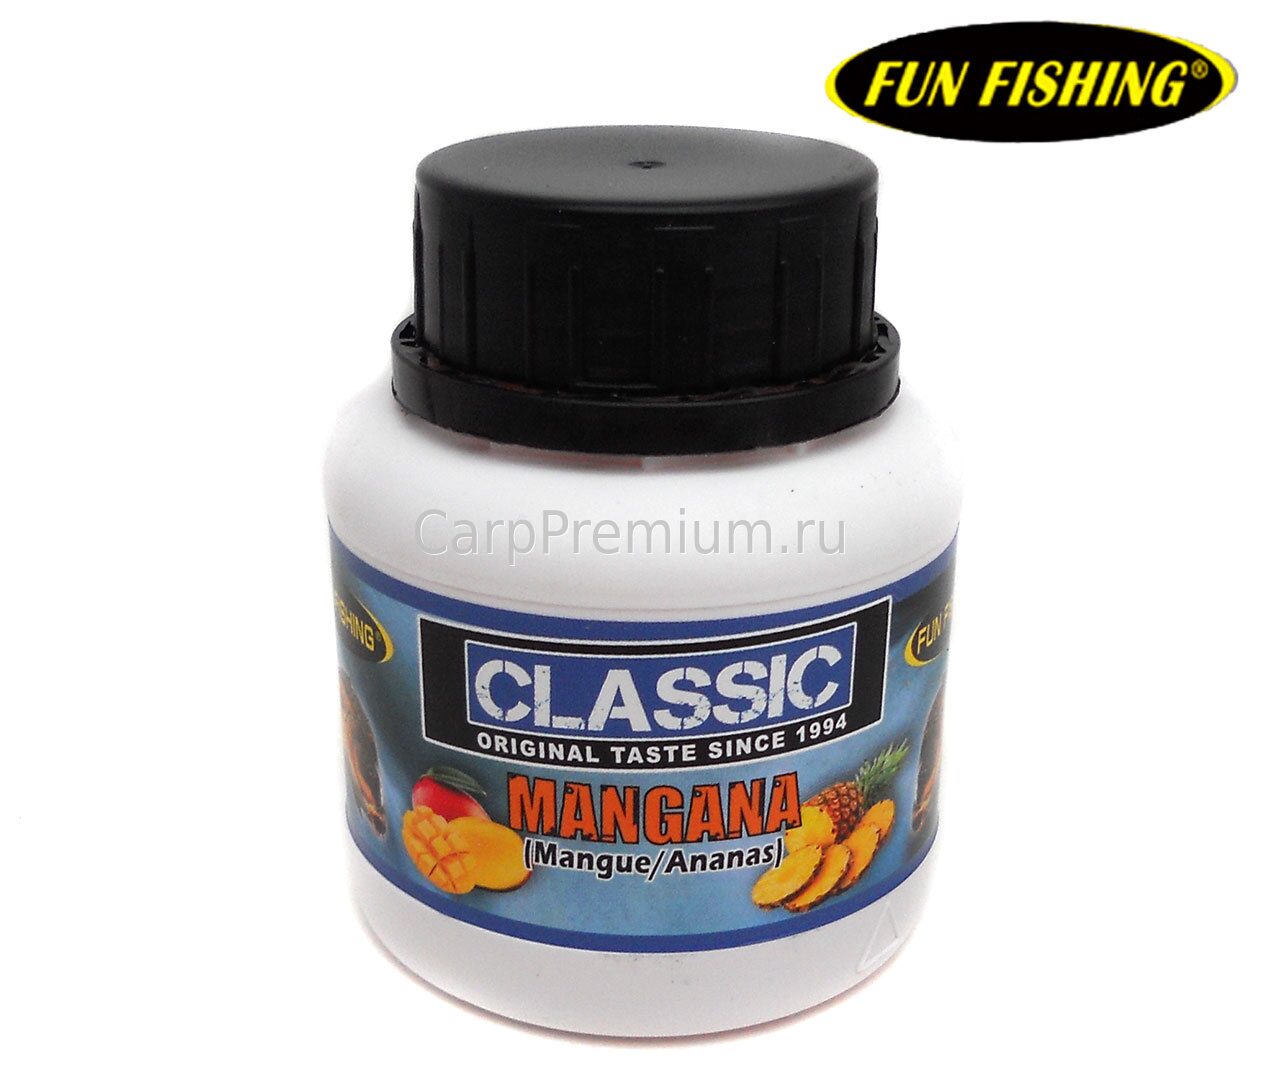 Дип Манго / Ананас Fun Fishing (Фан Фишинг) - Booster Classic (серия Классик) Mangana, 100 мл